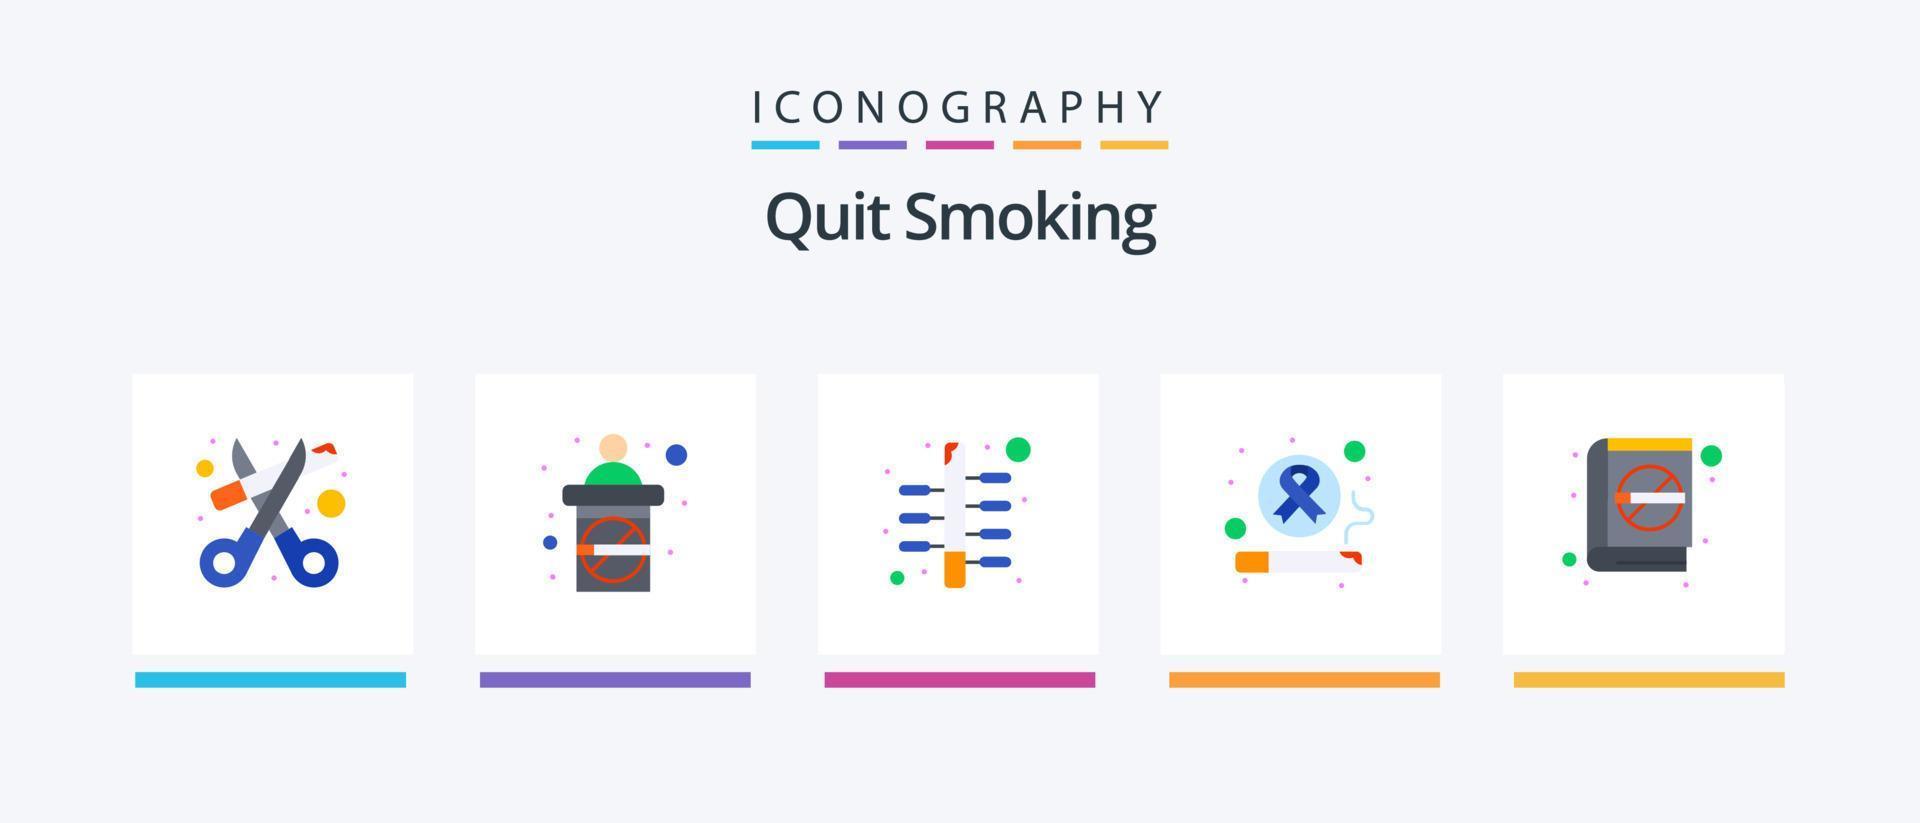 pare de fumar flat 5 icon pack incluindo fumar. hábito. fumar. Câncer. desistir. design de ícones criativos vetor